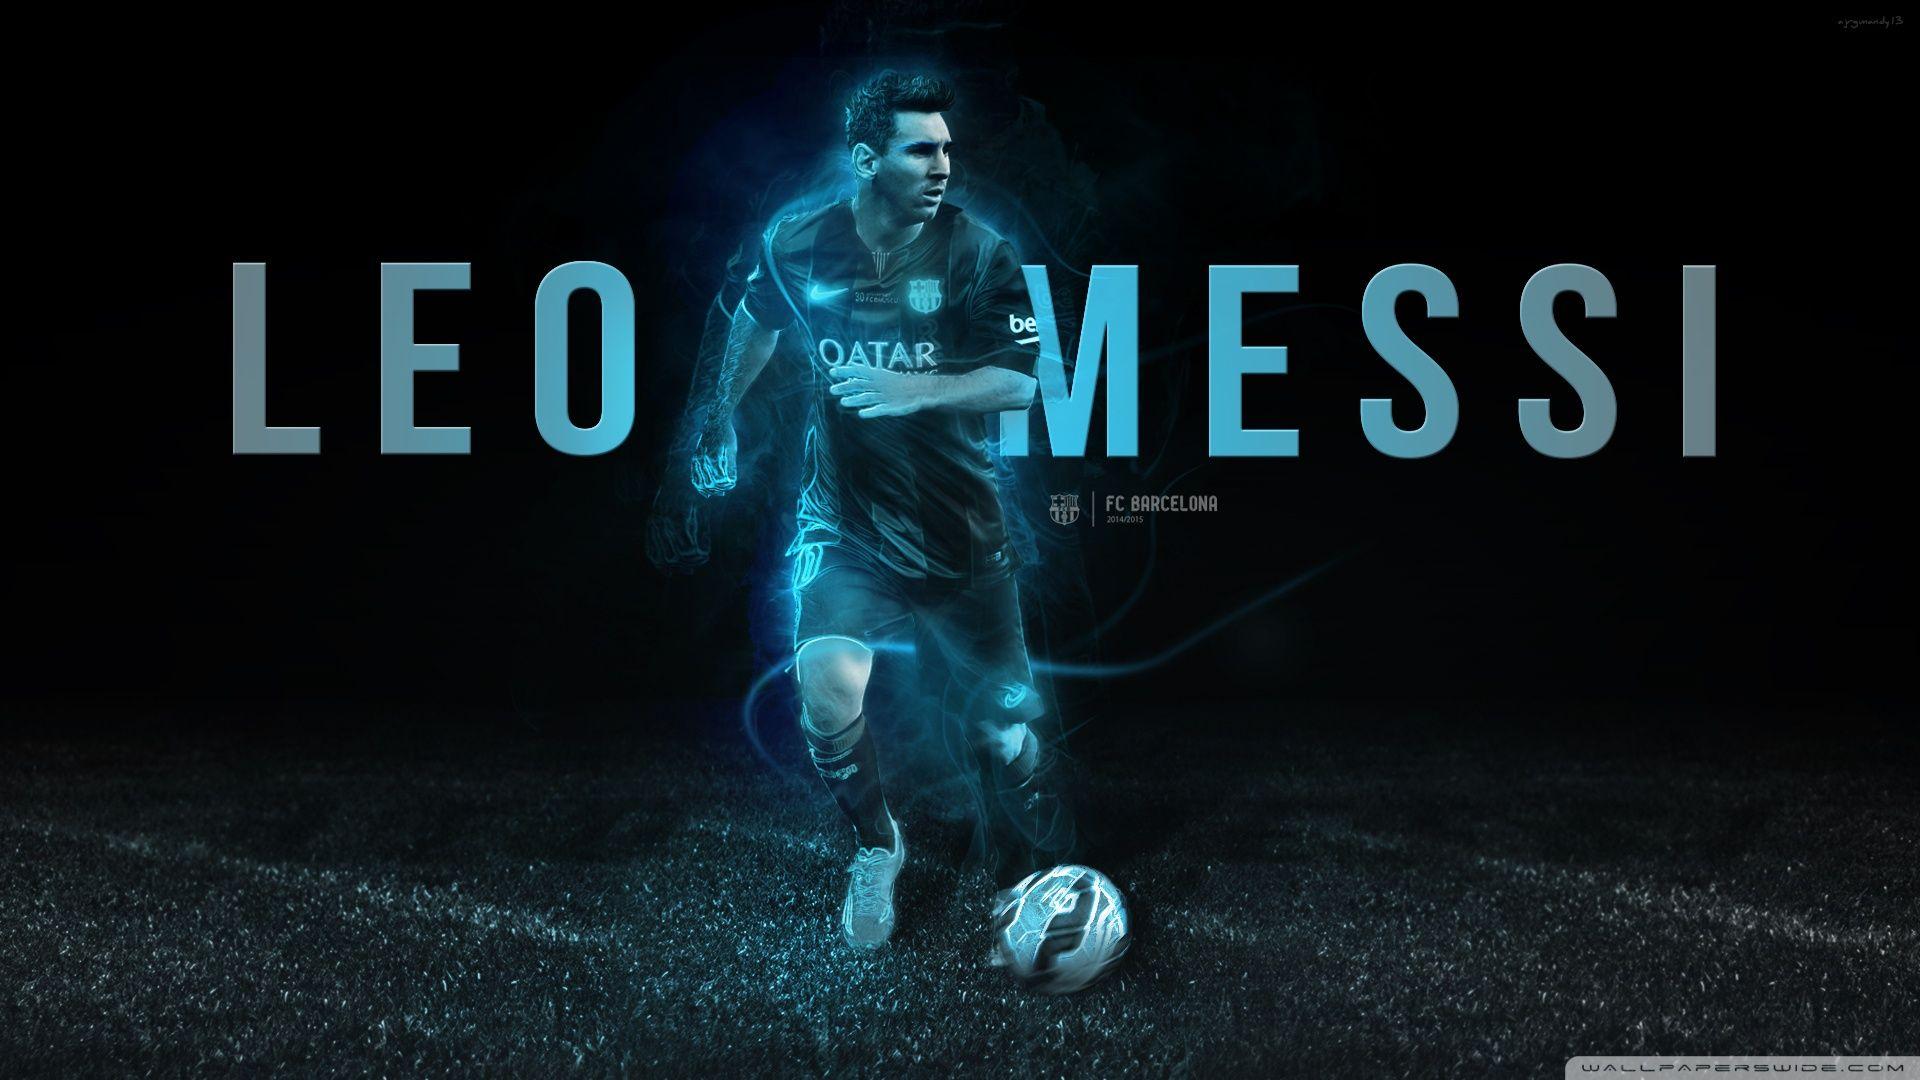 Leo Messi 2015 HD desktop wallpapers : High Definition : Mobile